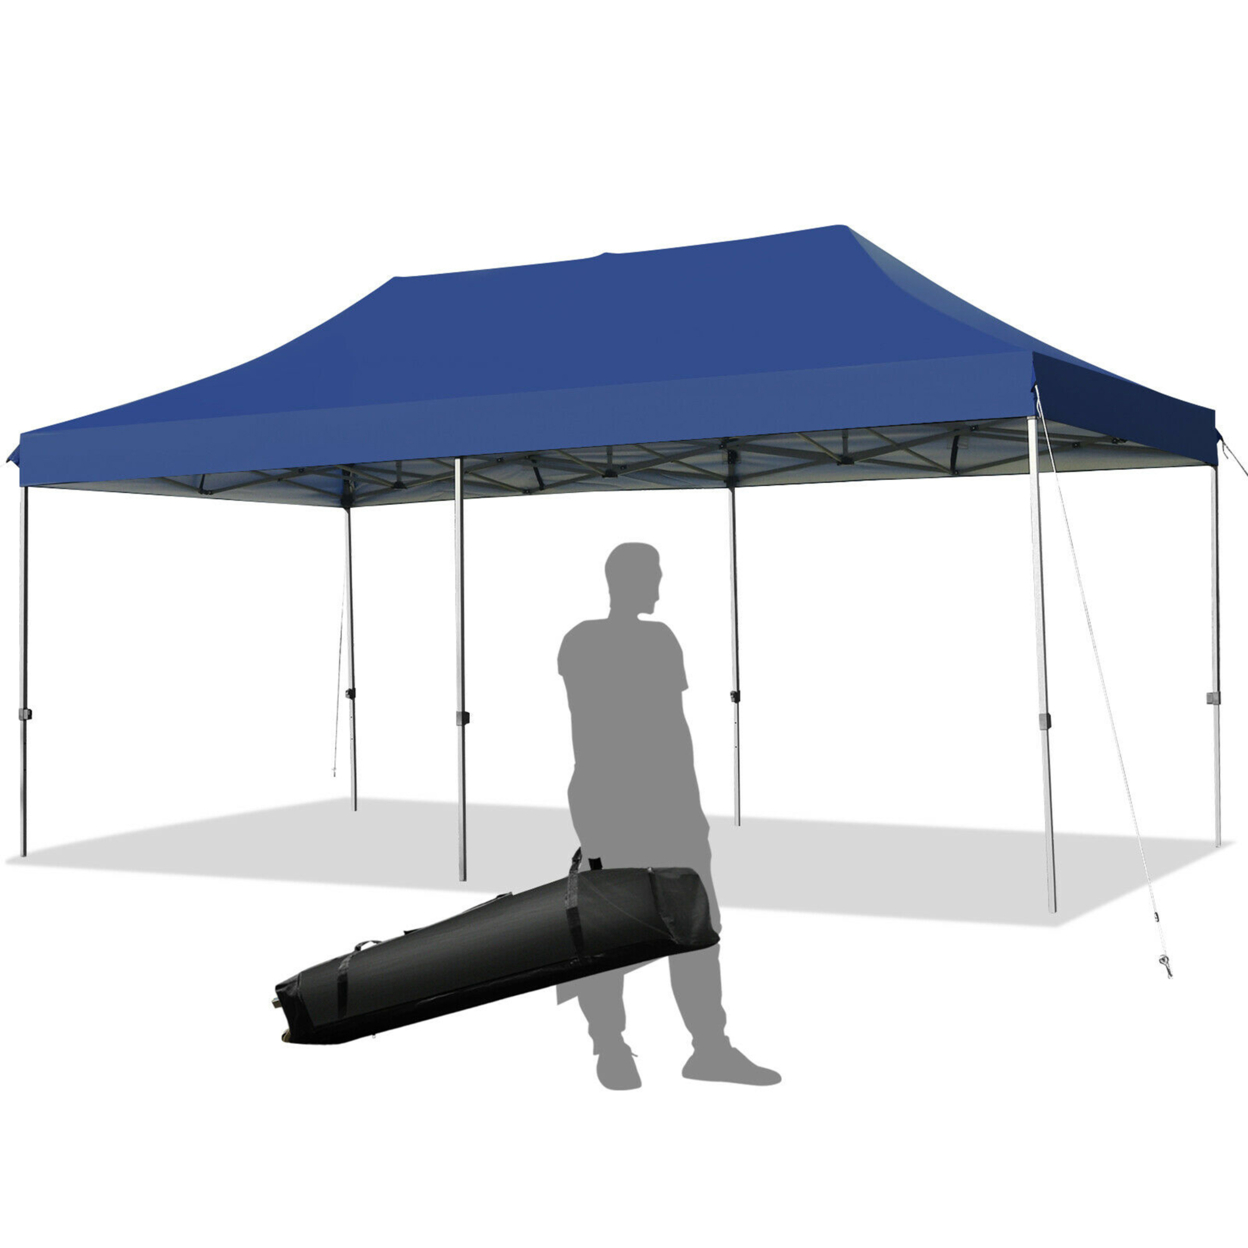 10'x20' Pop Up Canopy Tent Folding Heavy Duty Sun Shelter Adjustable W/Bag - Blue